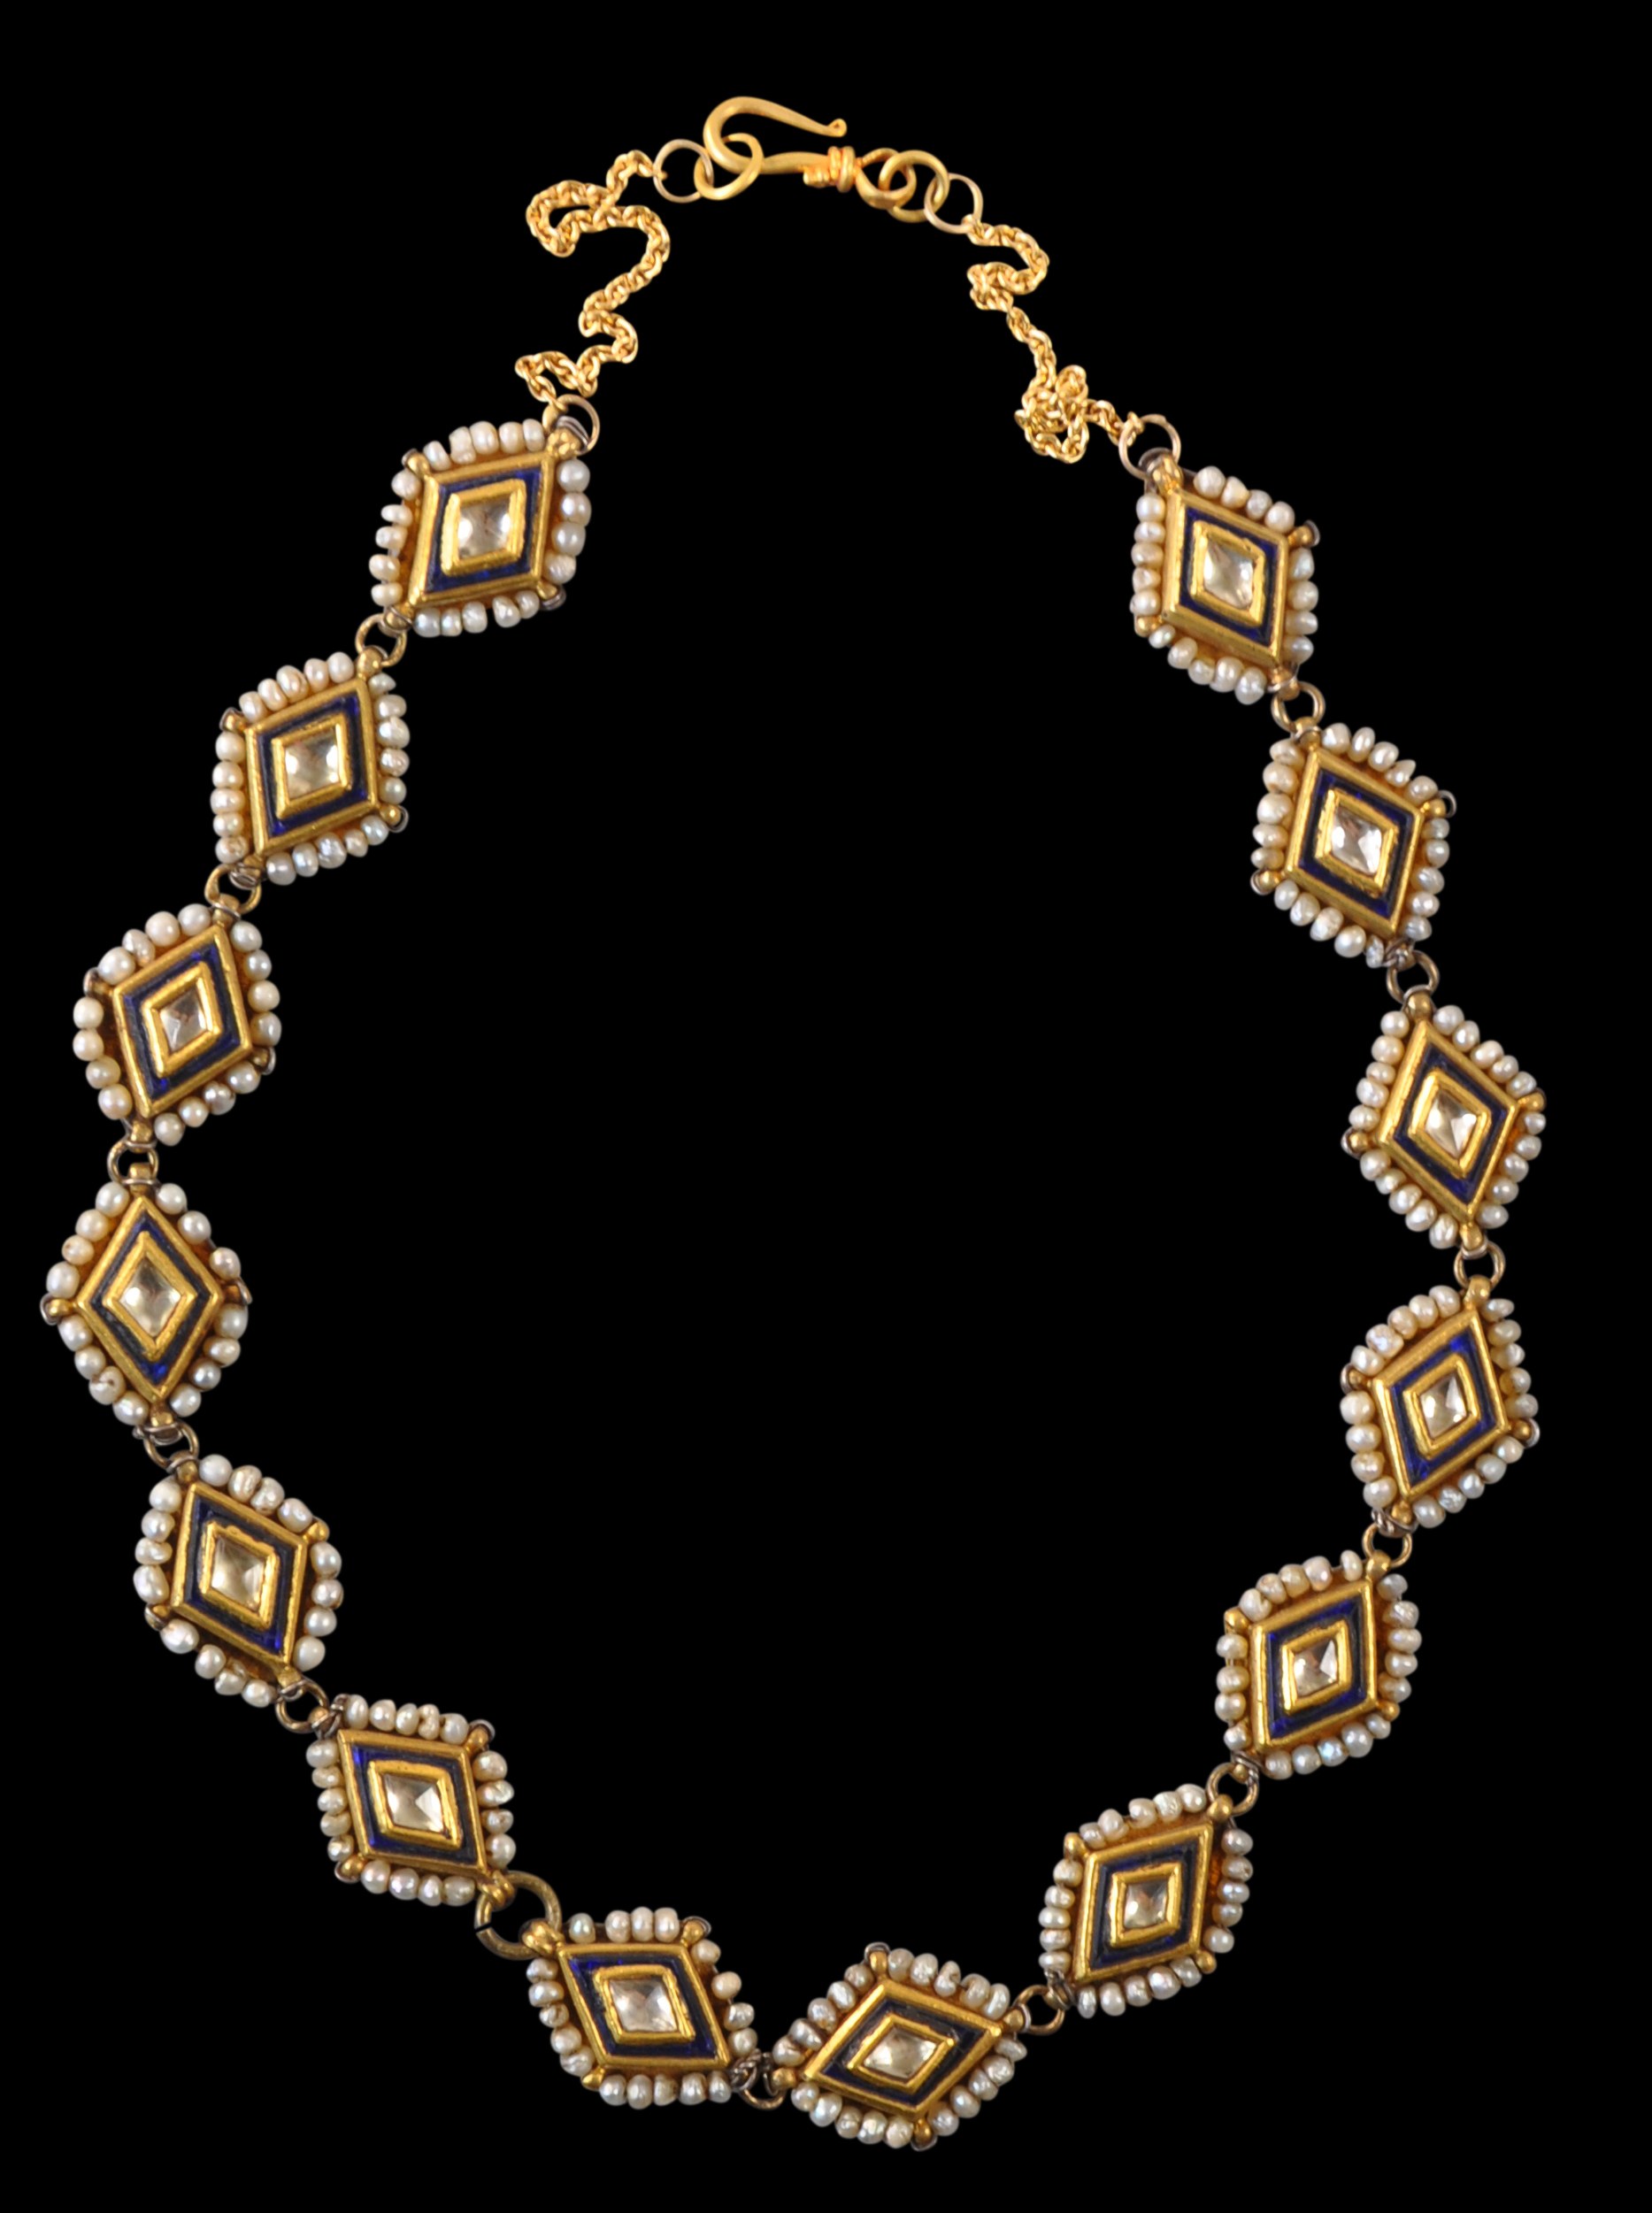 7 Carat White Sapphire Necklace - JaneysJewels